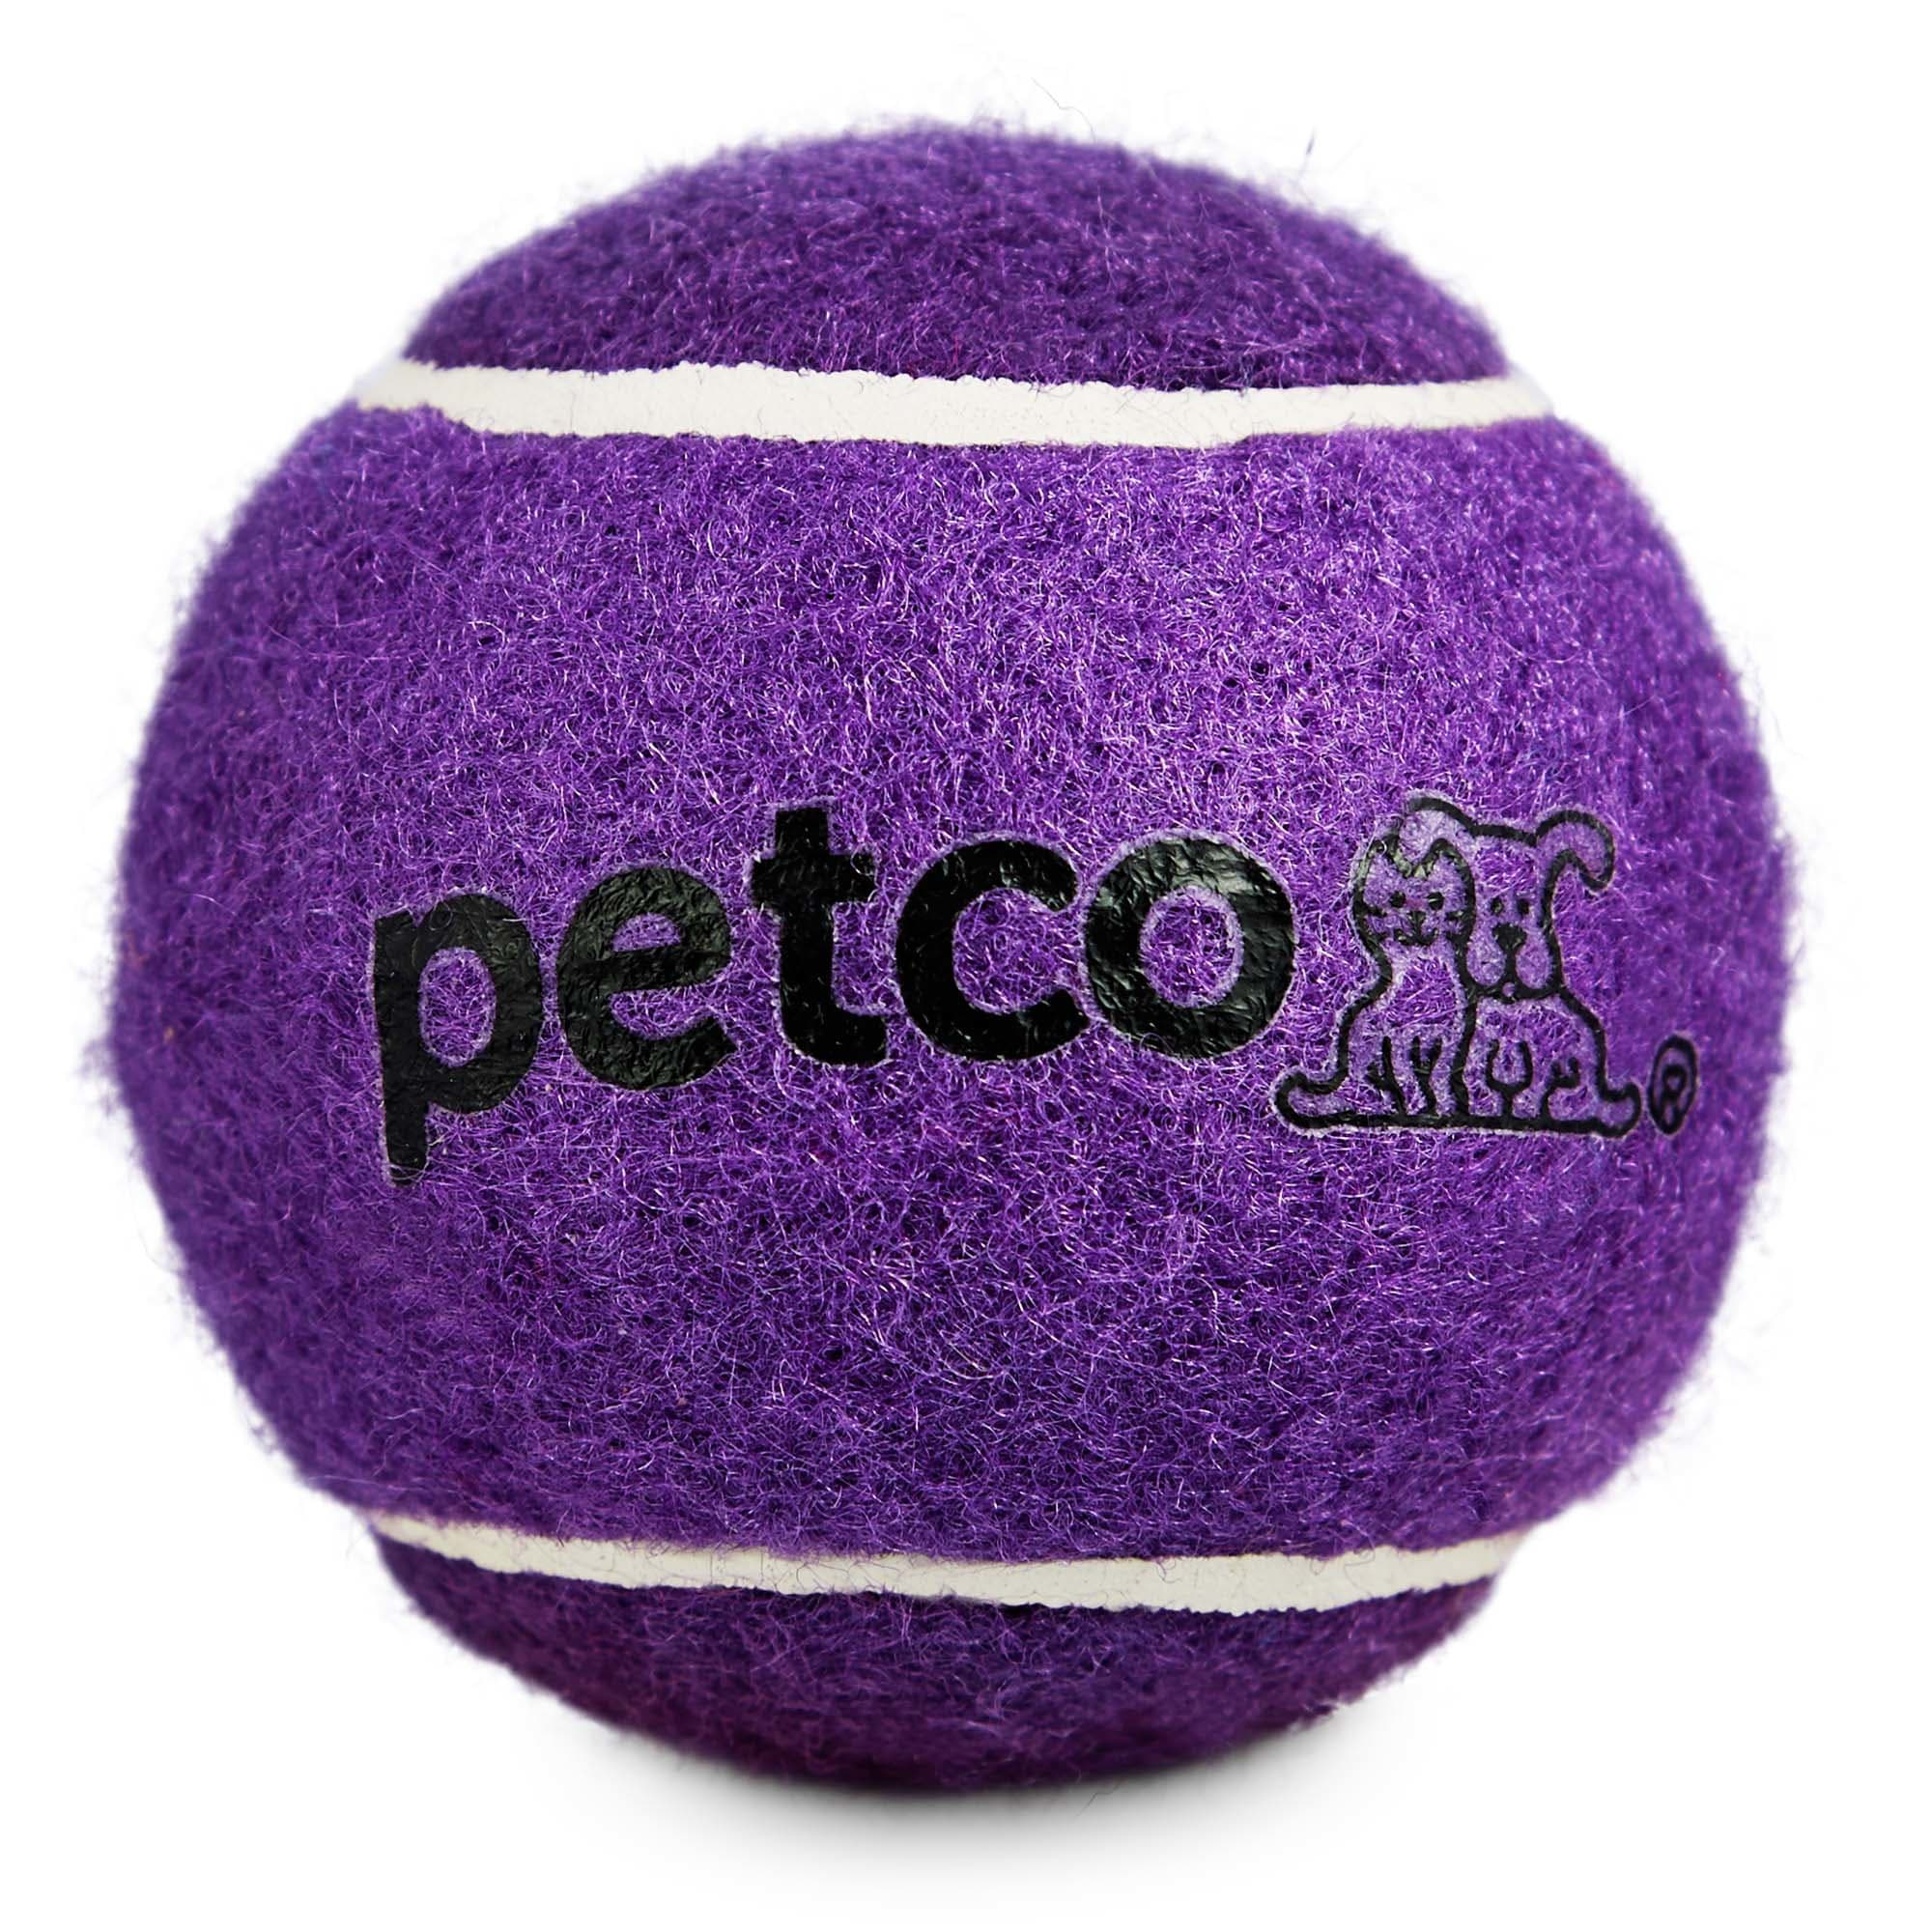 purple dog toy